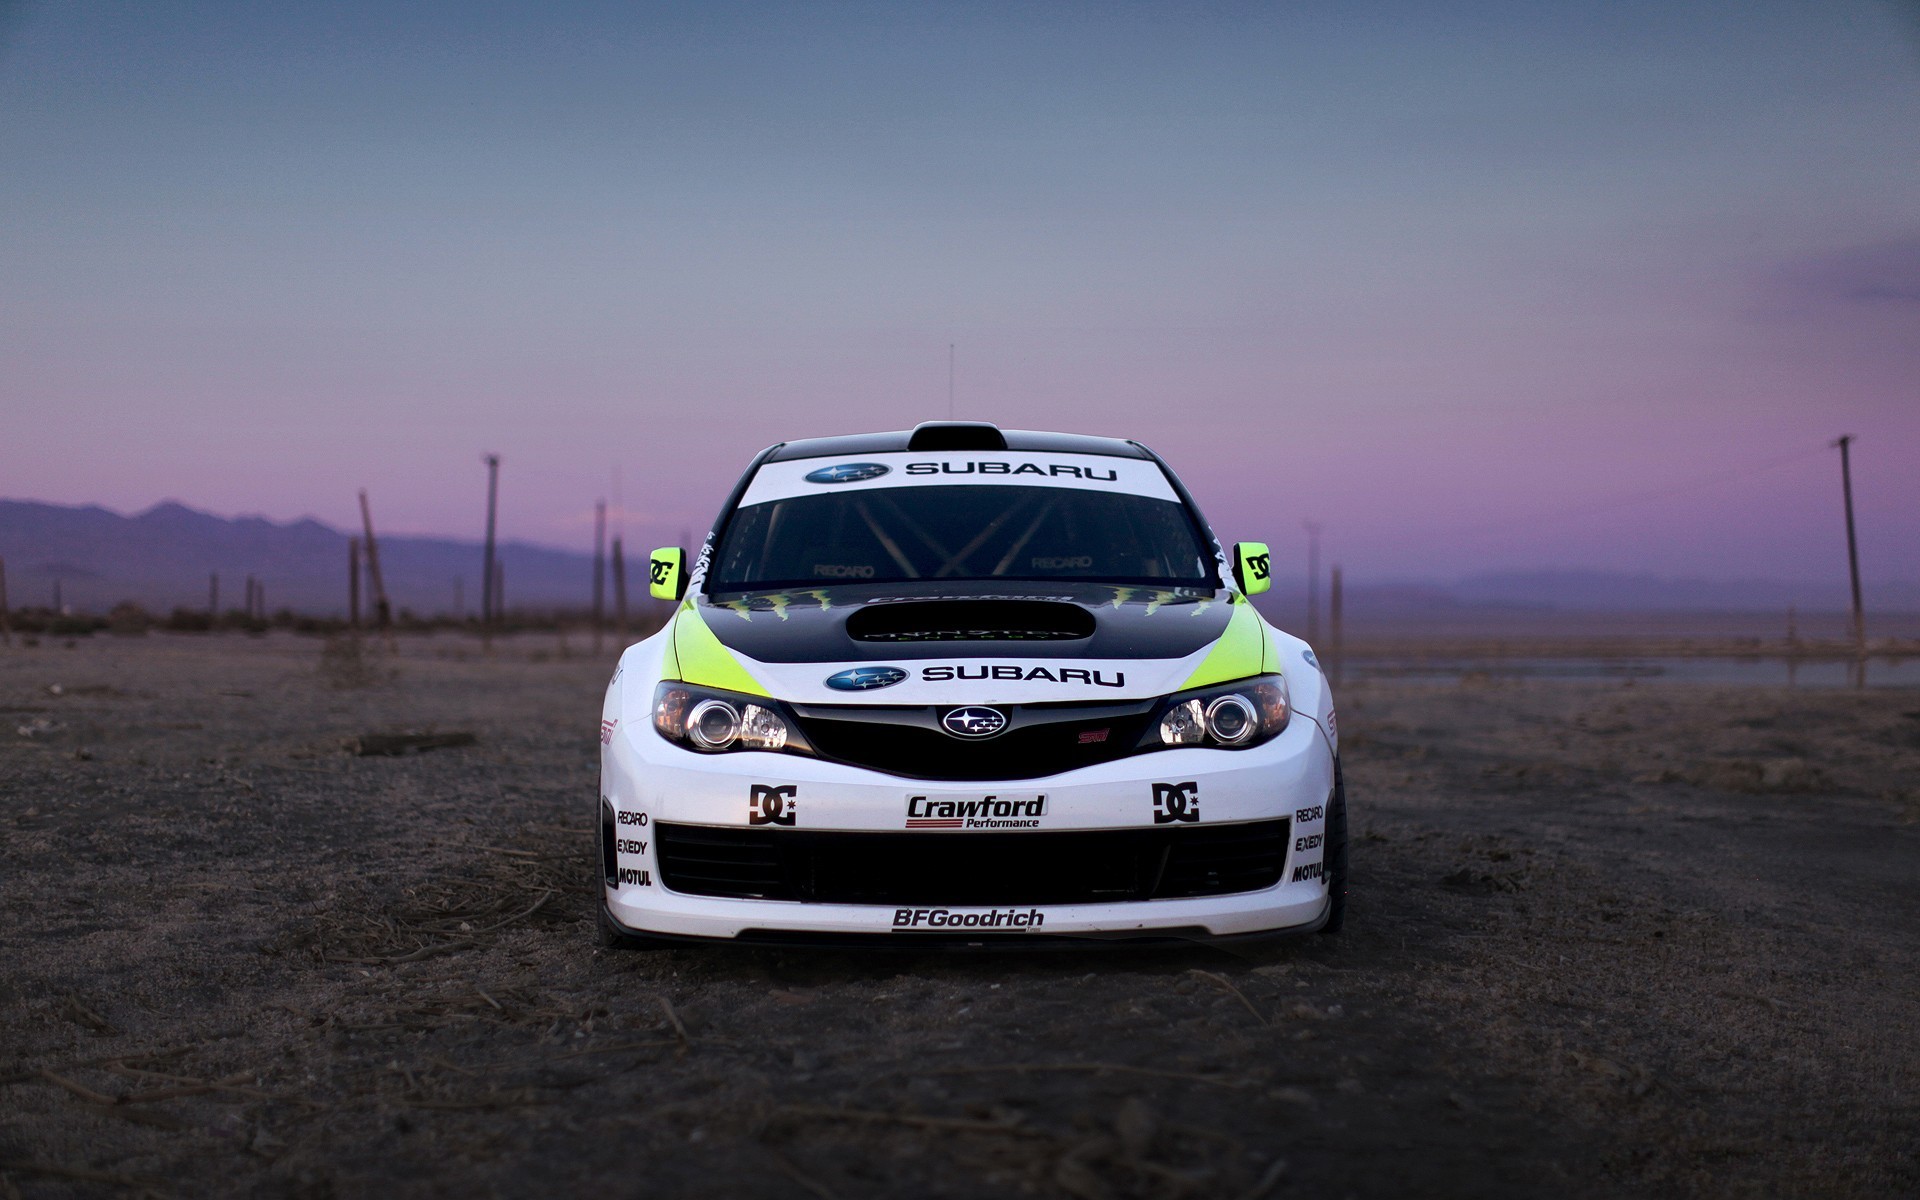 Wallpapers Subaru rally race on the desktop